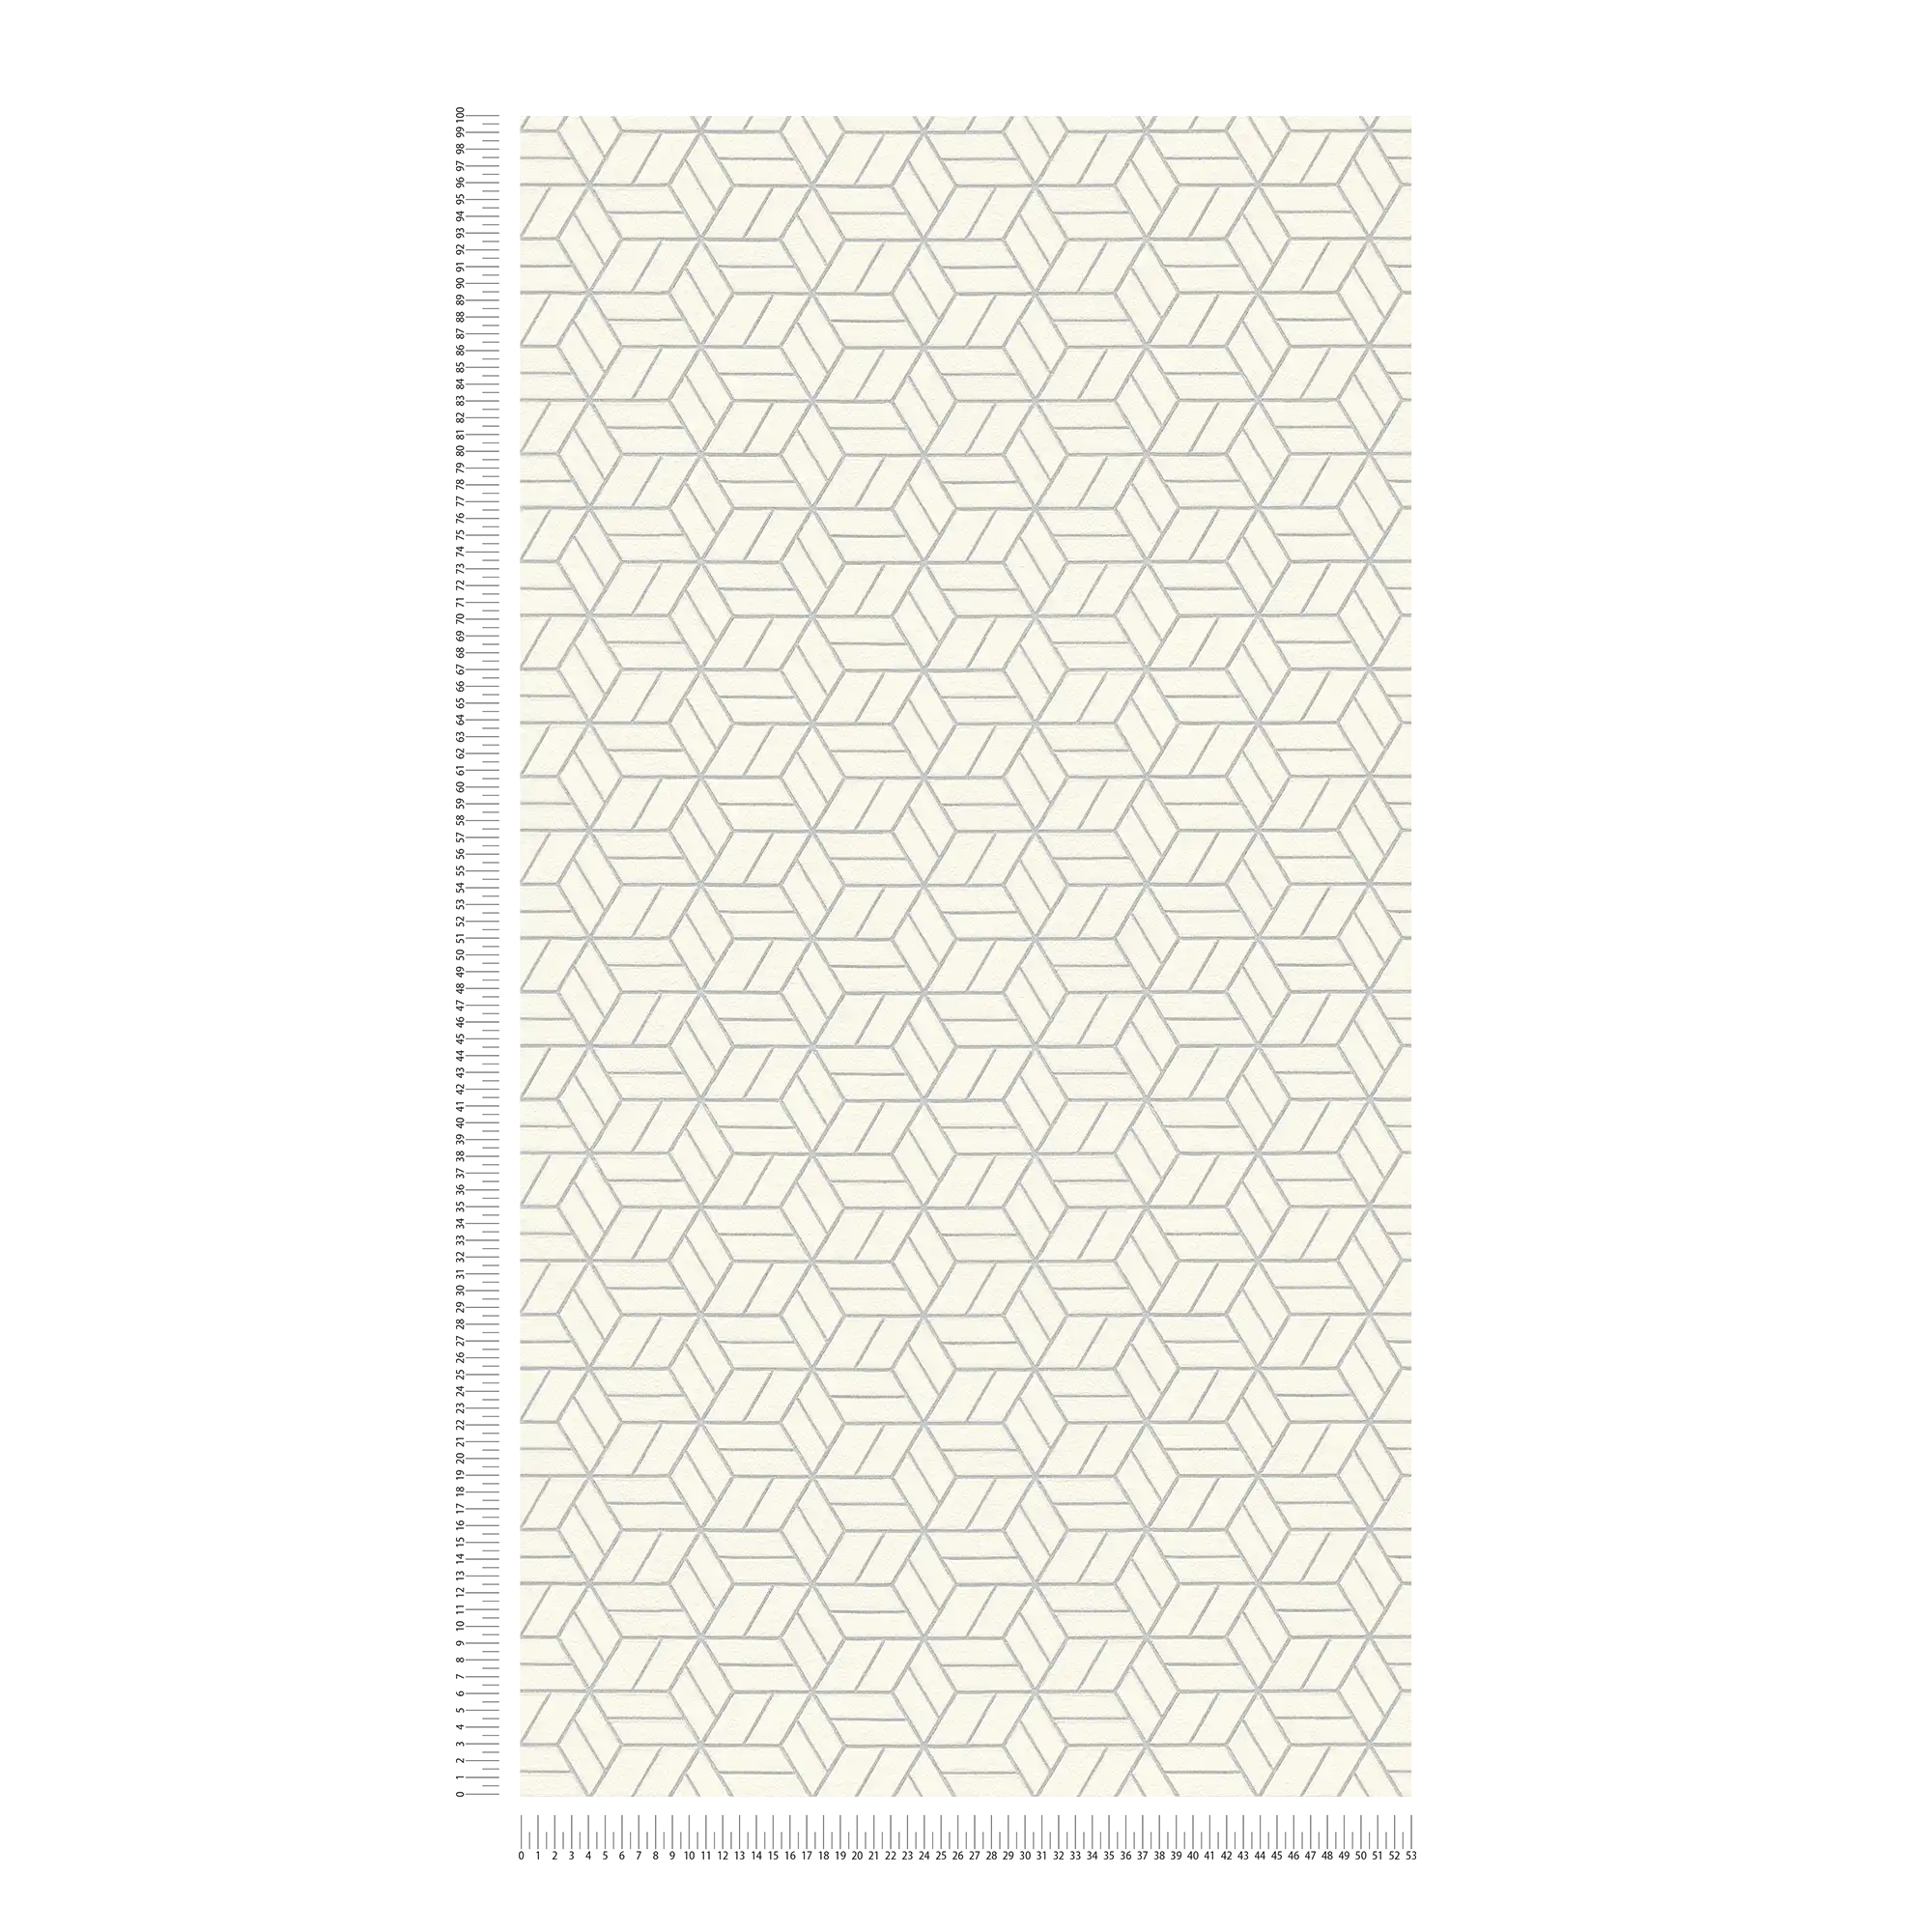             behang geometrisch patroon & glittereffect - zilver, grijs, wit
        